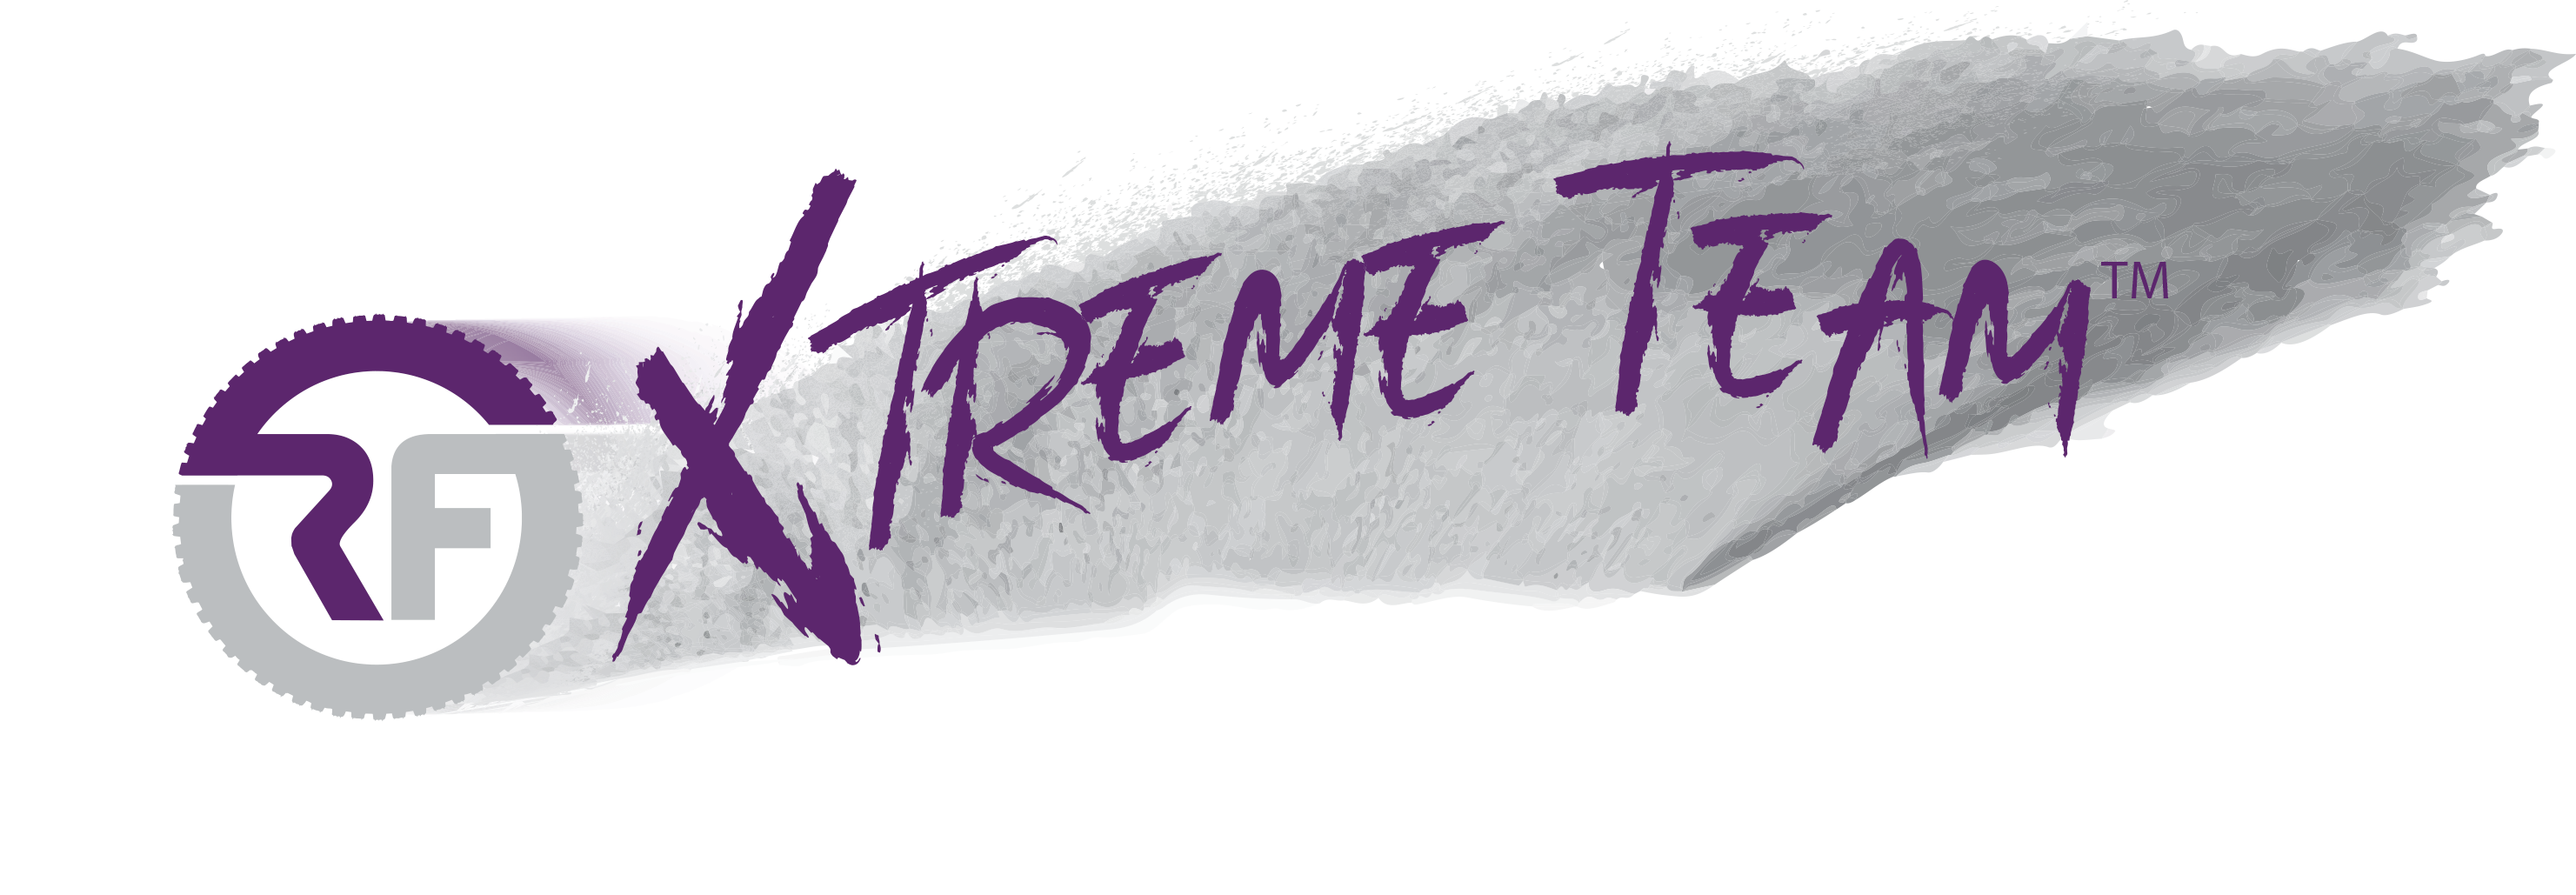 Xtreme Team Logo